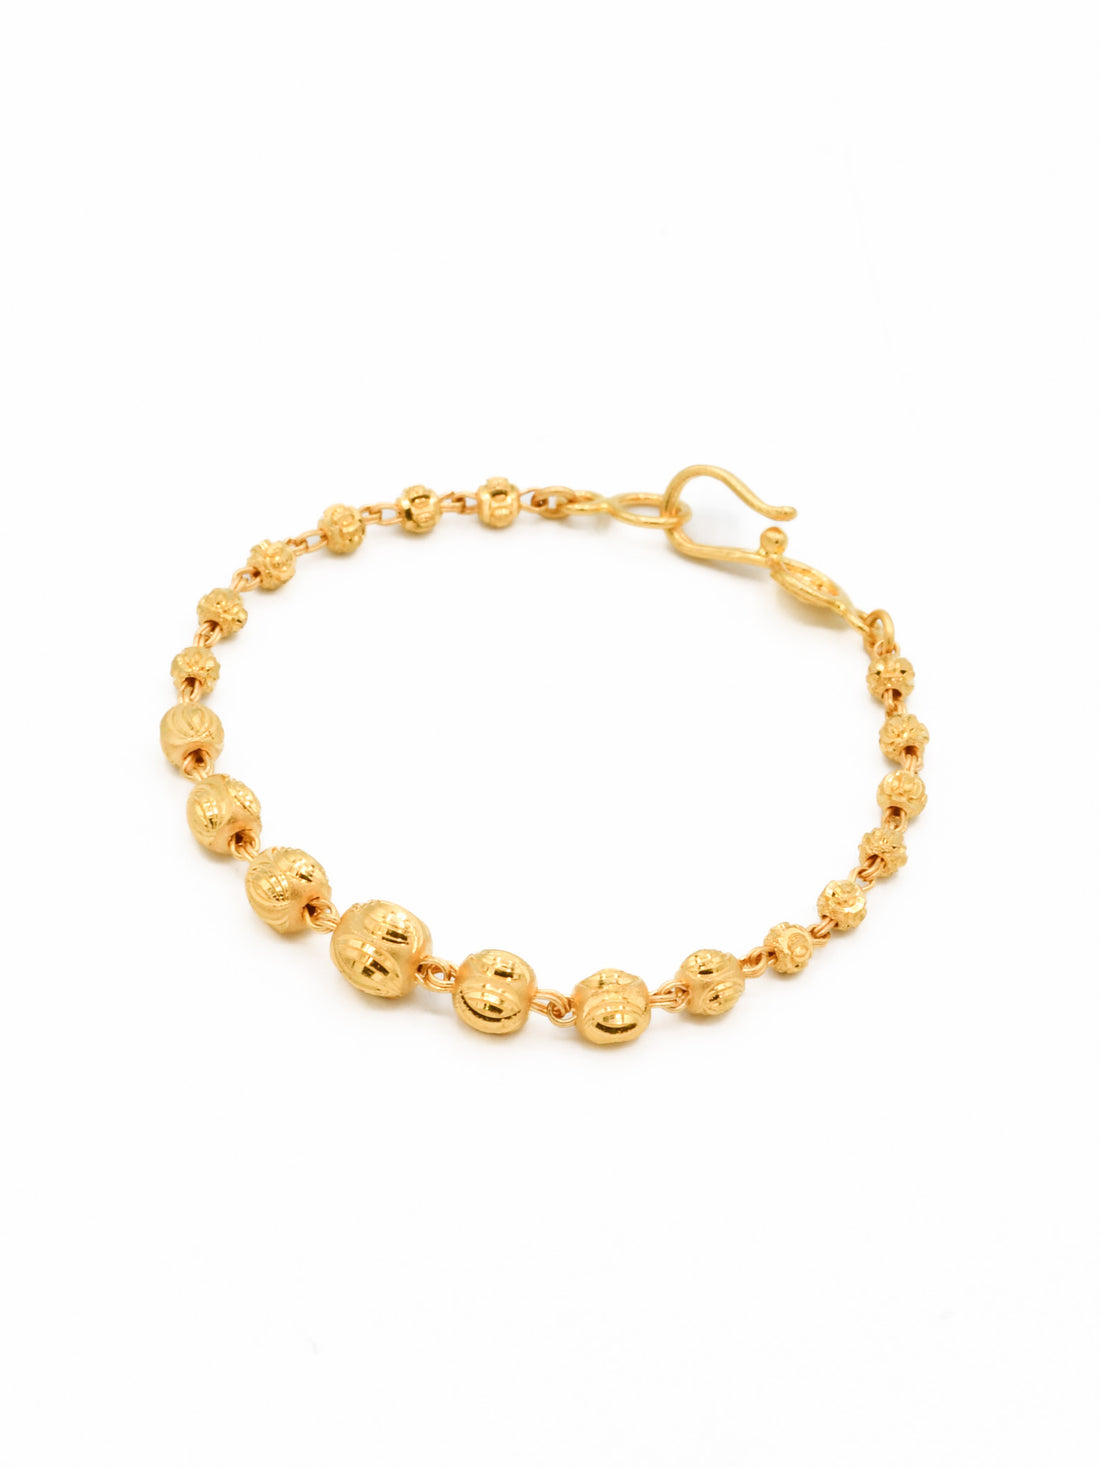 22ct Gold Ball 1 PC Baby Bracelet - Roop Darshan